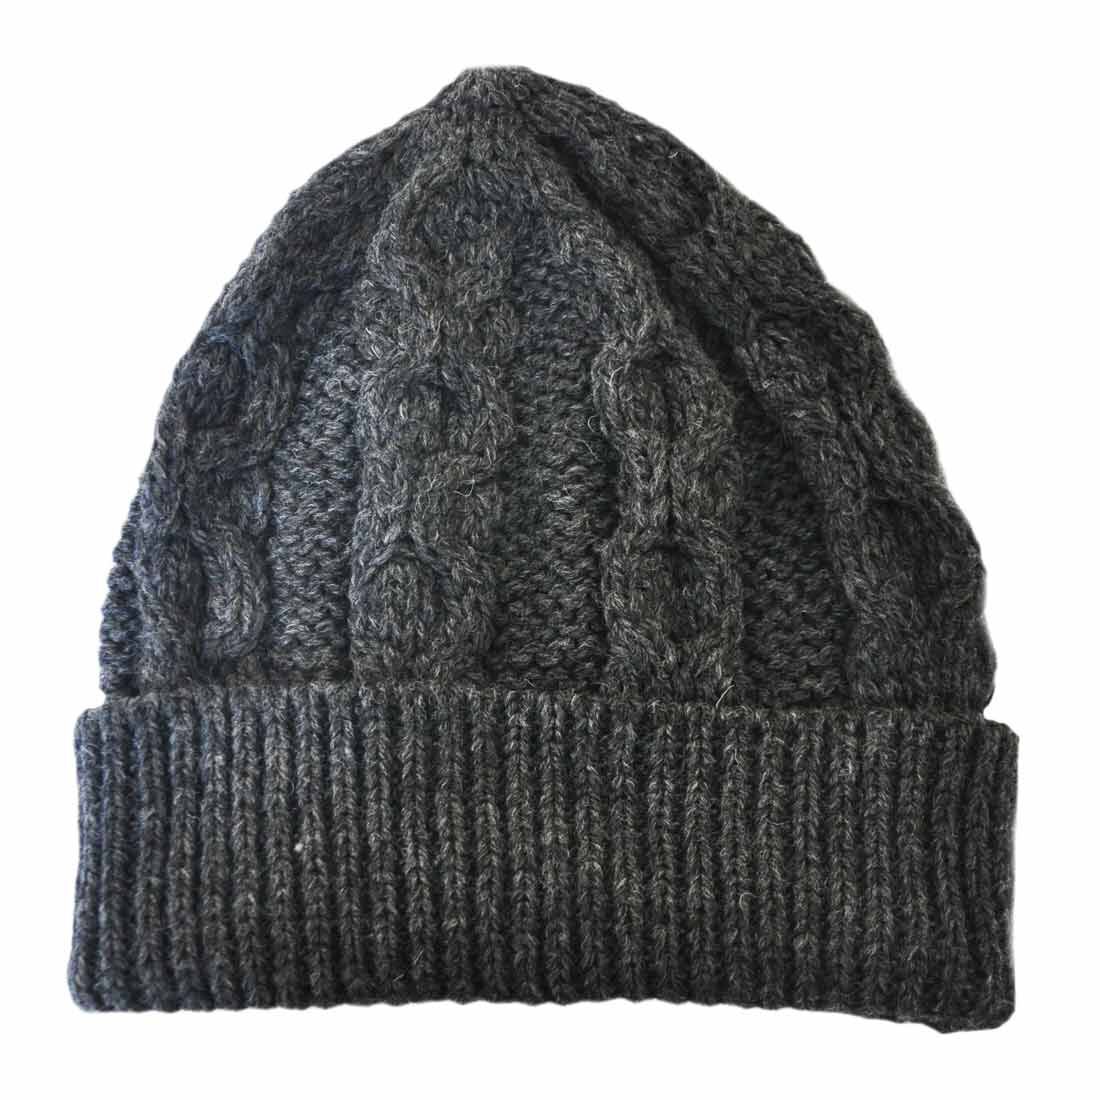 Buy Merino Wool Knit Hat Charcoal | Carrolls Irish Gifts